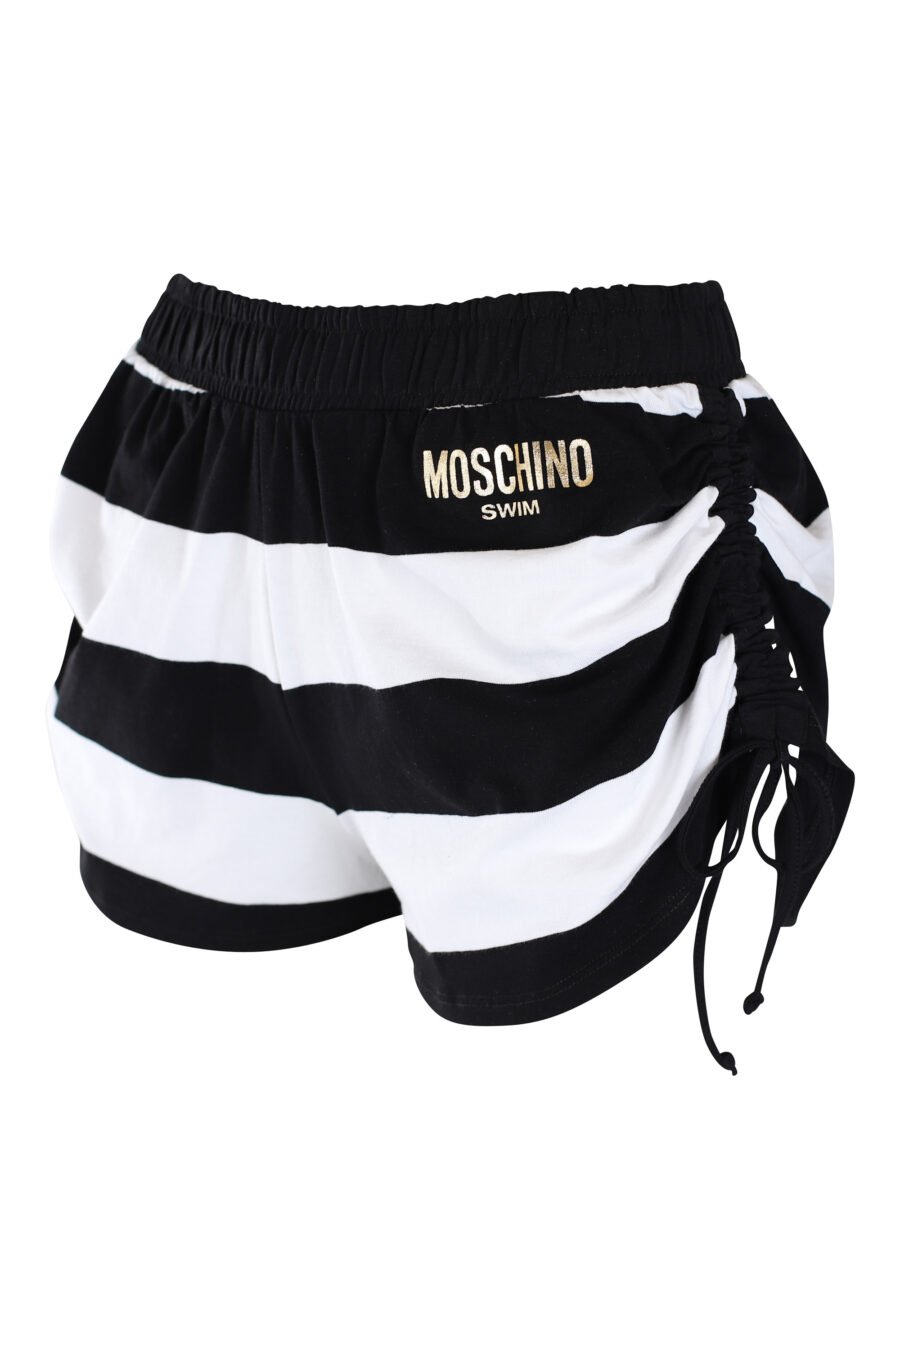 Bicolour black and white striped shorts with gold mini-logo - IMG 2250